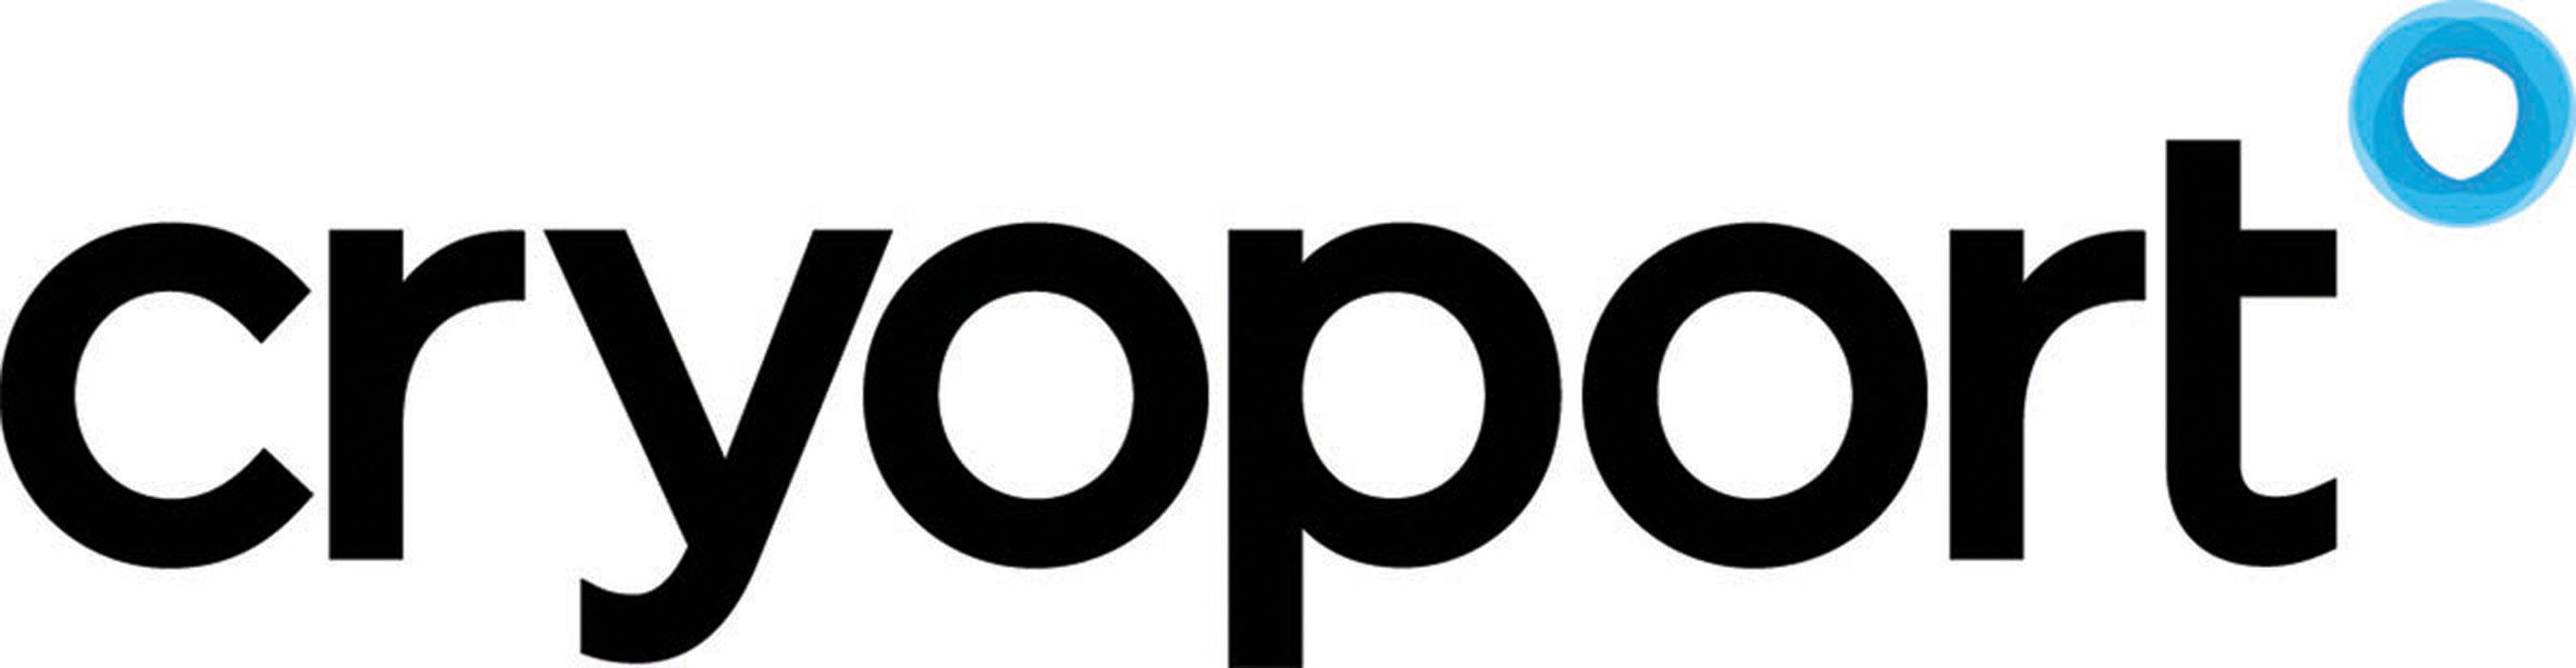 Cryoport, Inc. Logo. (PRNewsFoto/Cryoport, Inc.) (PRNewsFoto/CRYOPORT, INC.)